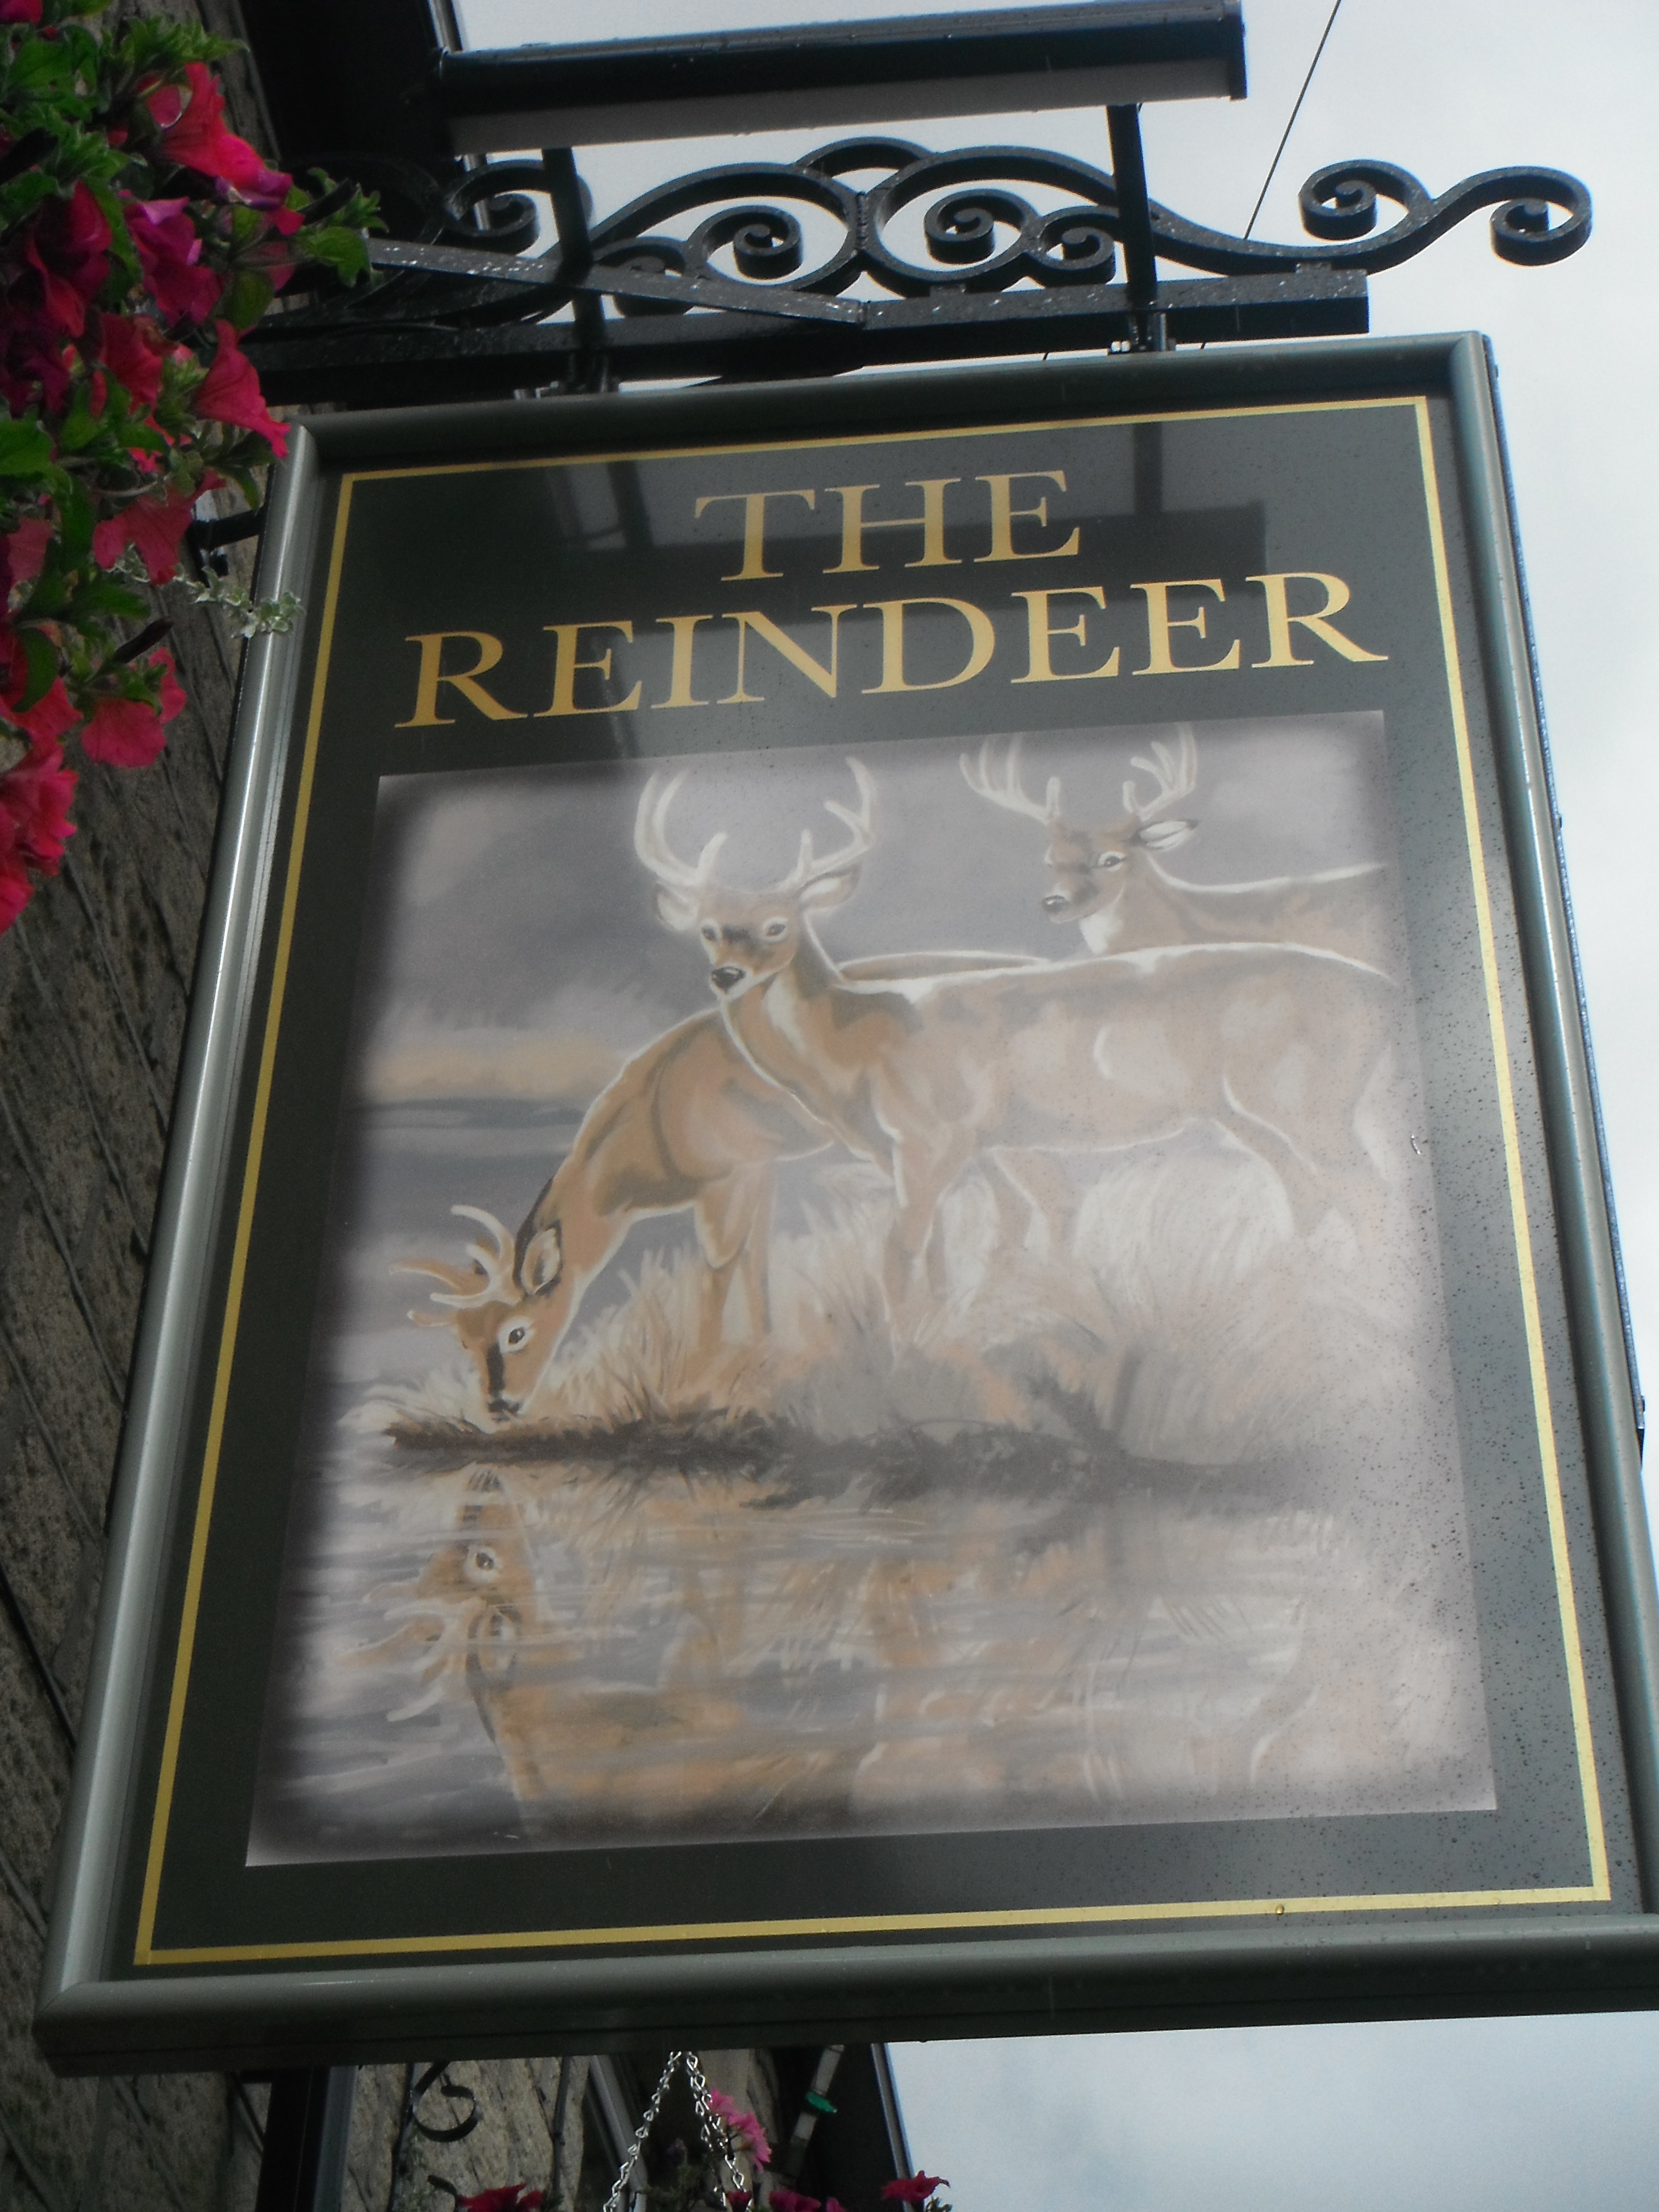 Photo taken by me – The Reindeer pub sign, Stalybridge, Manchester 